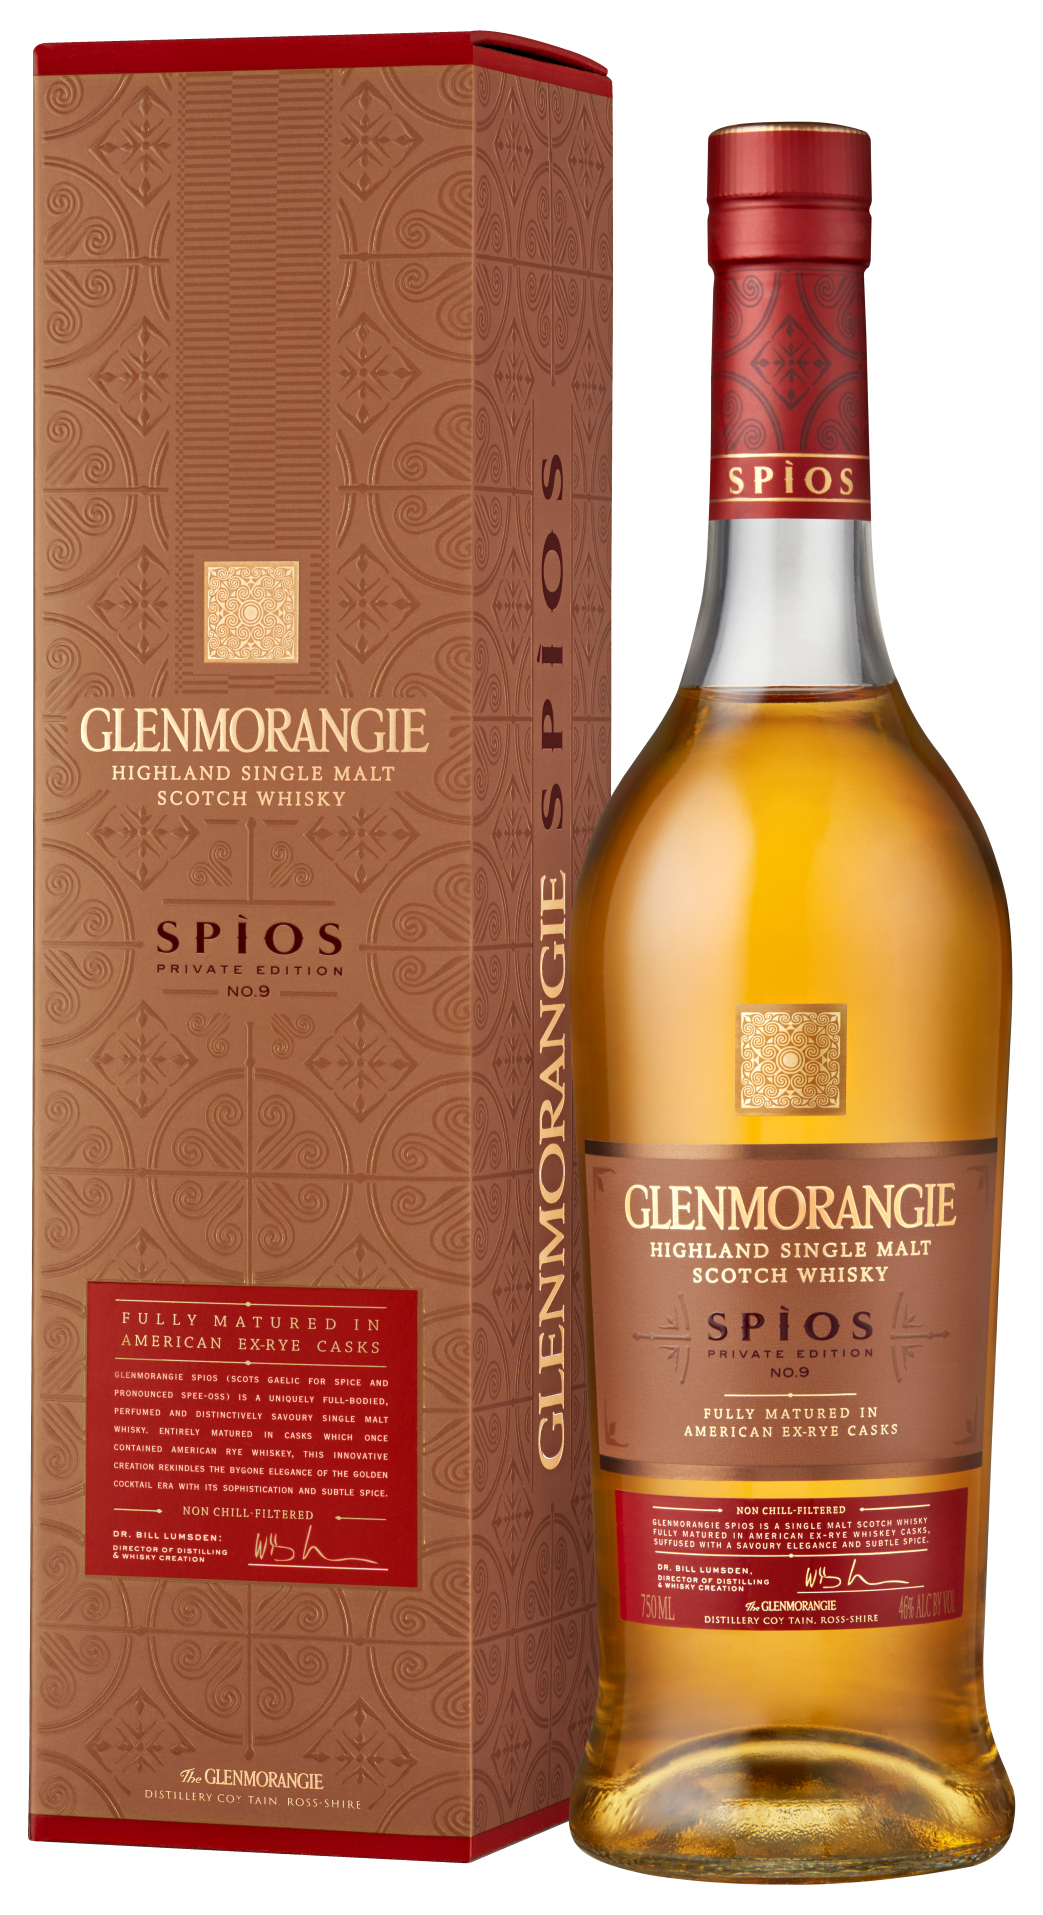 Glenmorangie Spios Private Edition